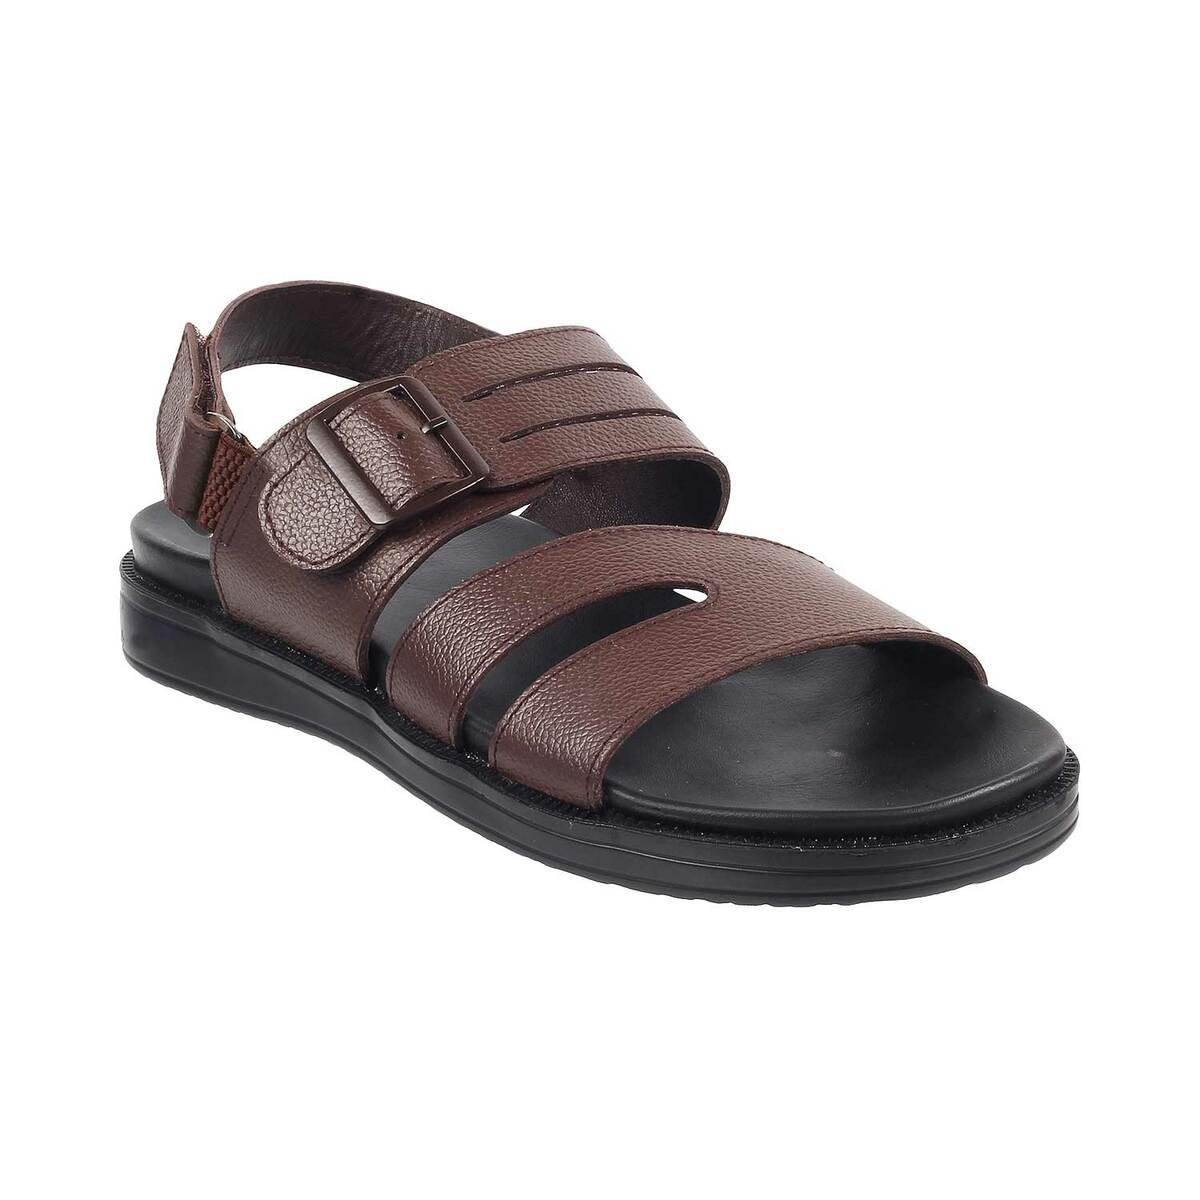 Buy ID Men Tan Casual Sandals Online | SKU: 52-4033-23-40 – Mochi Shoes-sgquangbinhtourist.com.vn